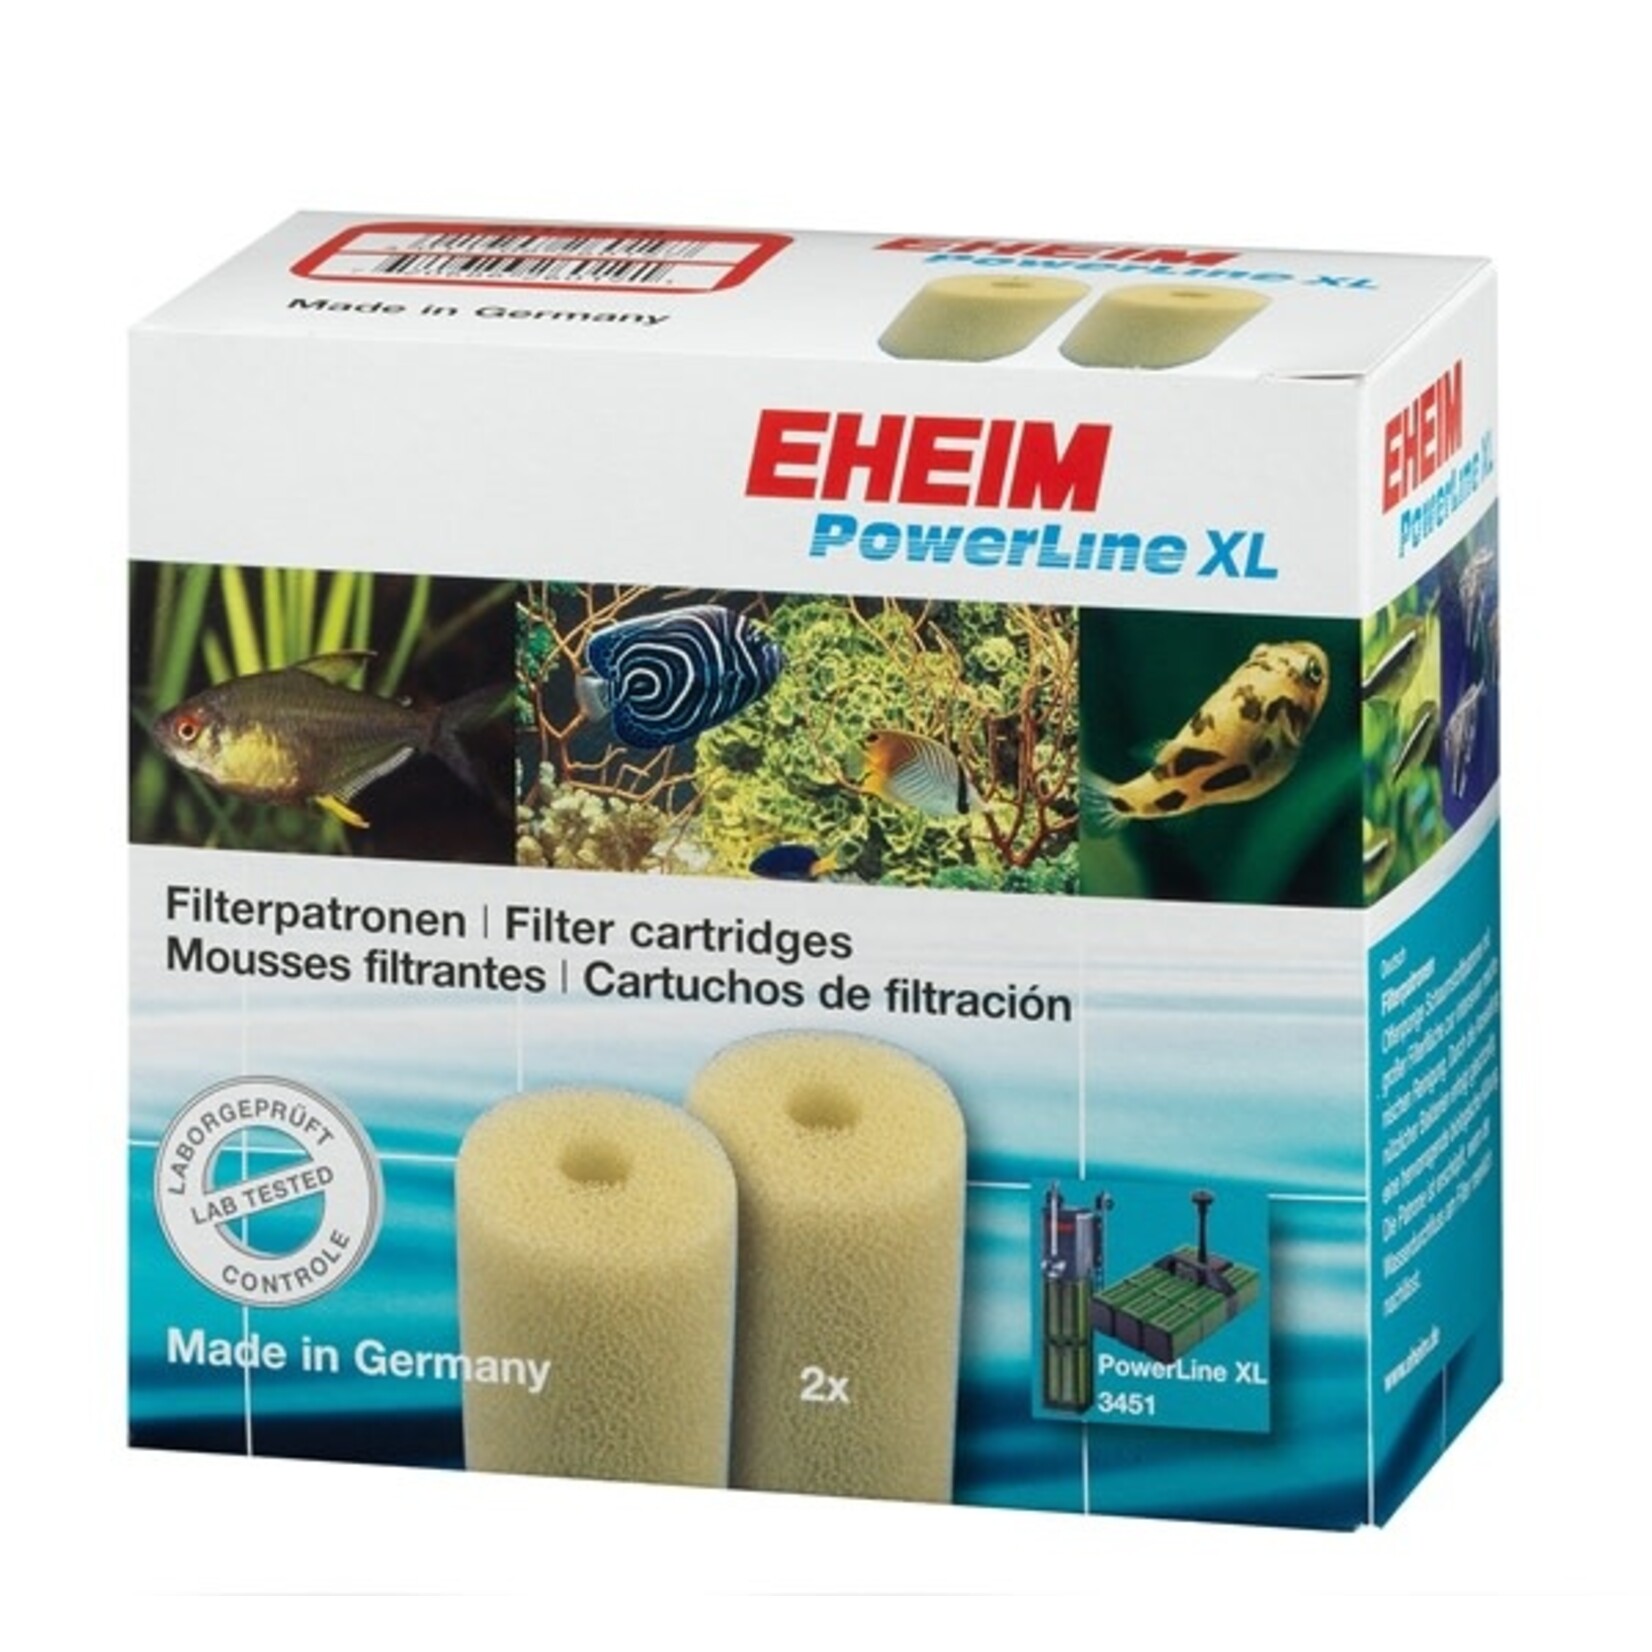 Eheim filter cartridge for 3451 2 pcs.